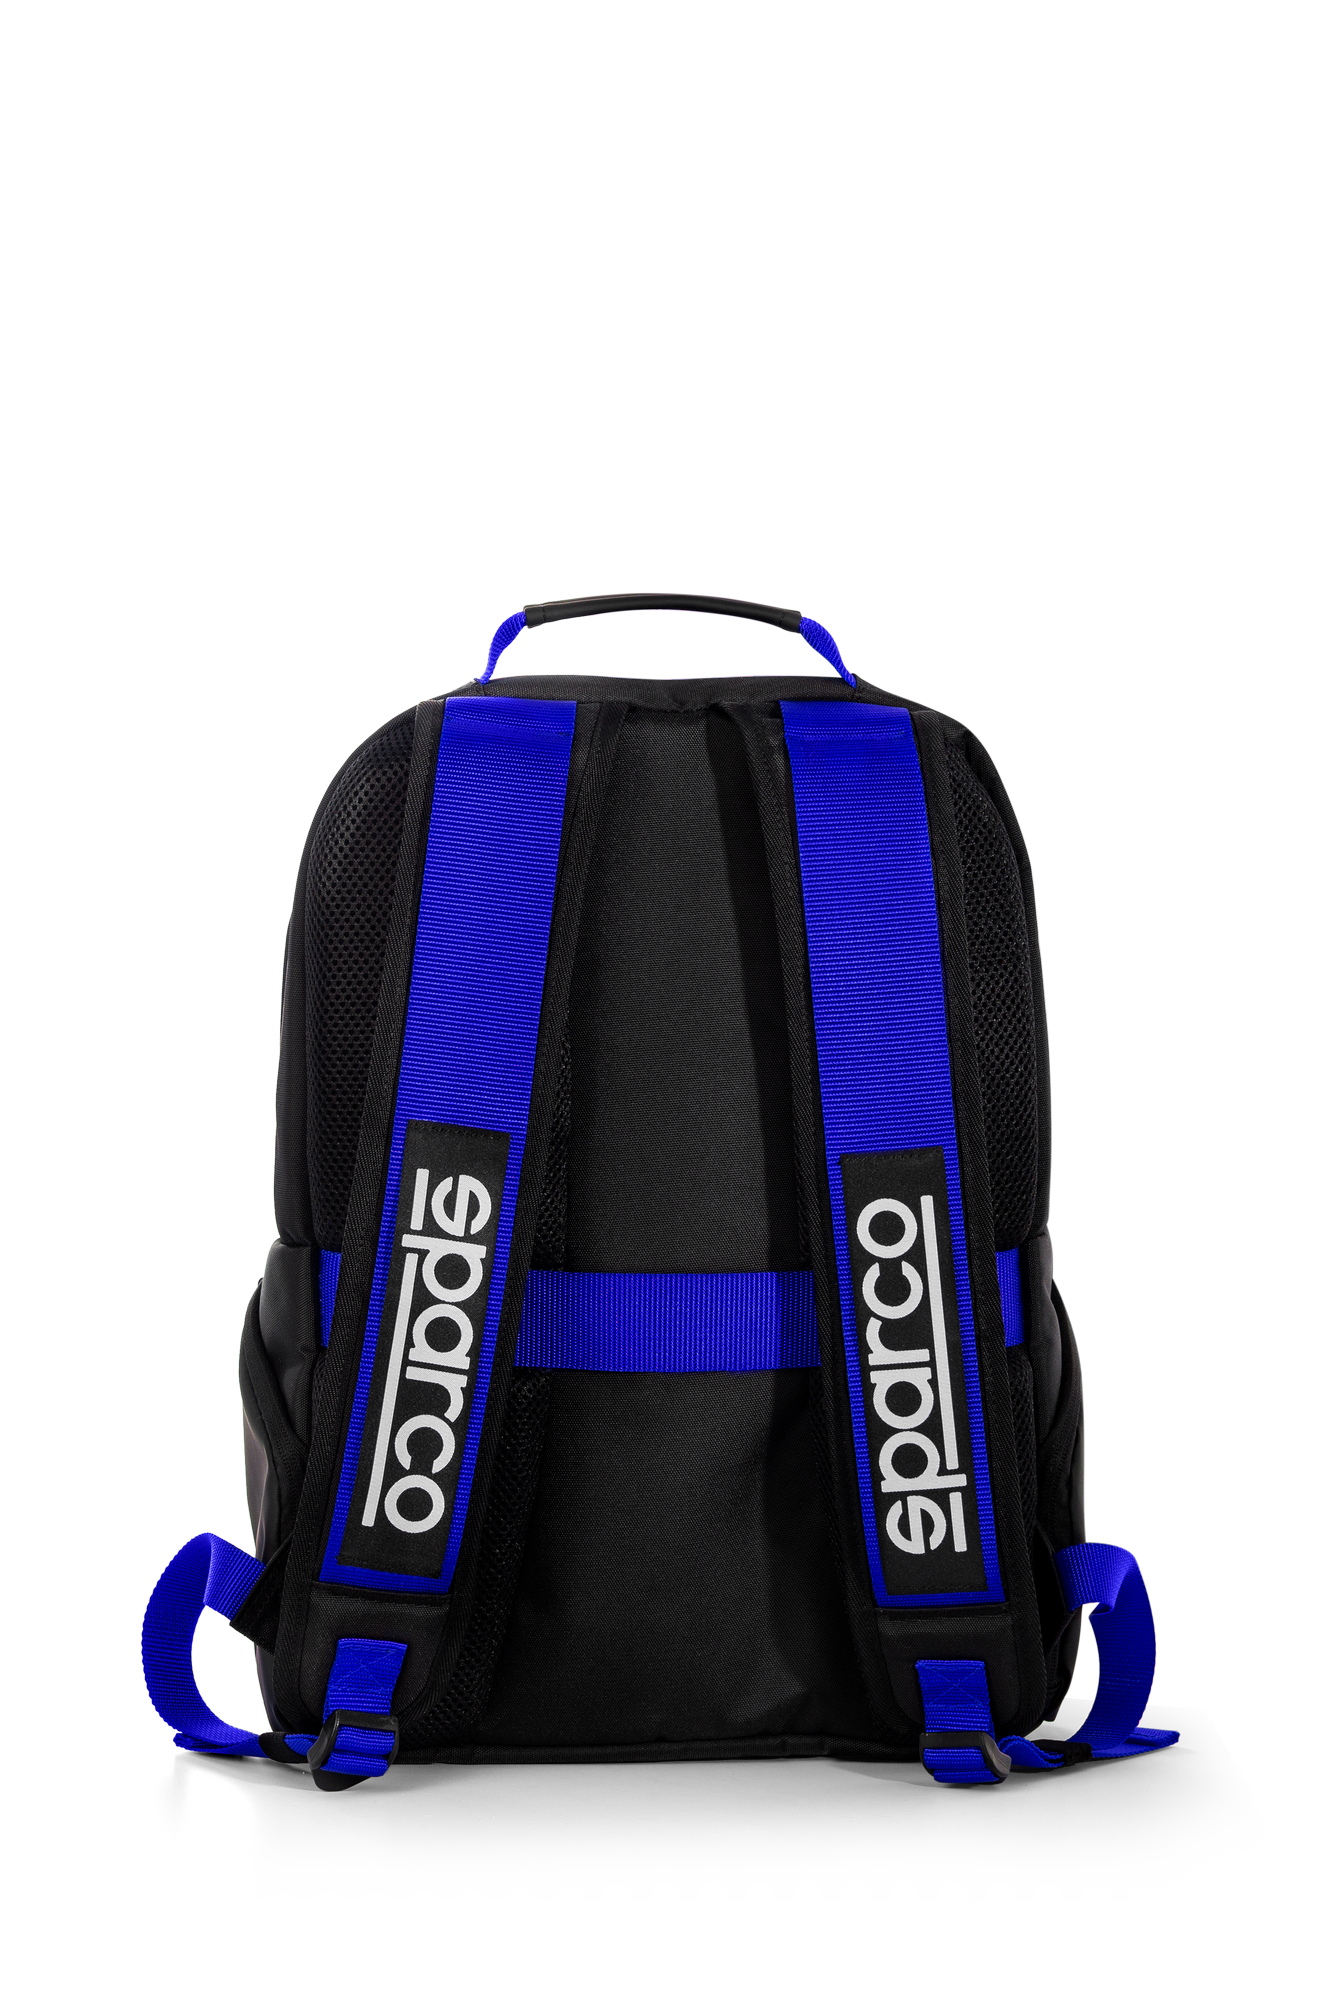 Backpack Sparco Stage Black/Blue